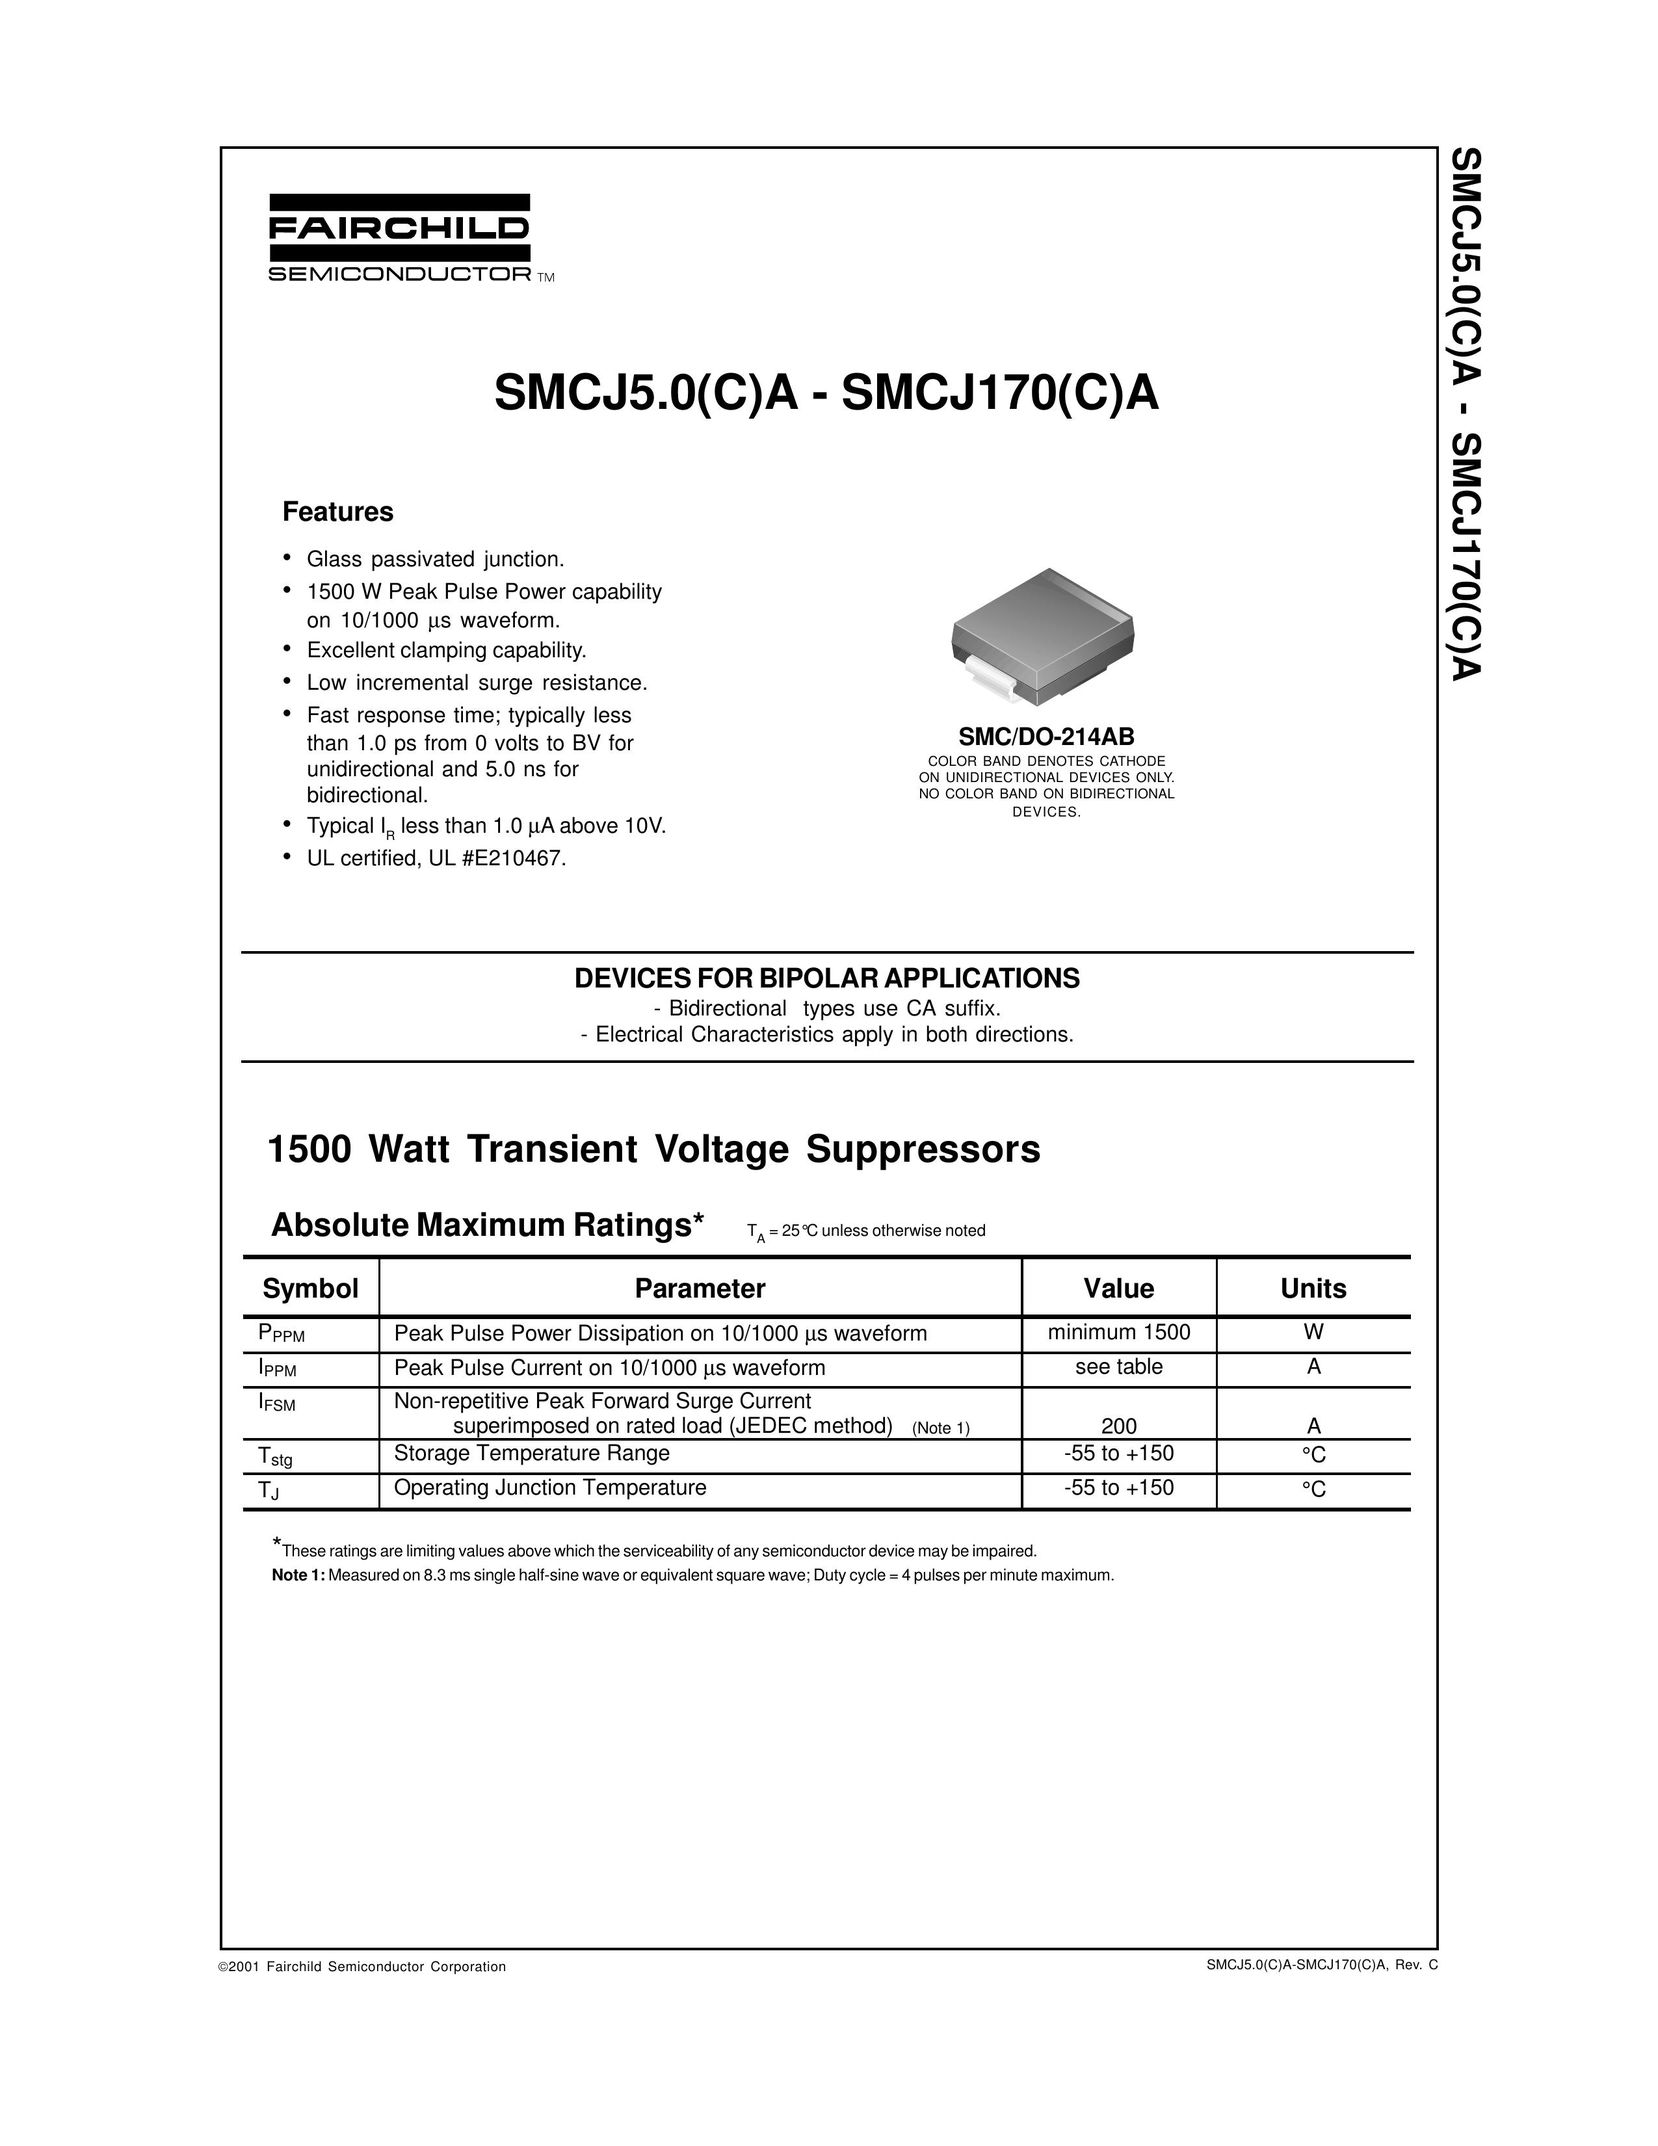 Fairchild SMC/DO-214AB Surge Protector User Manual